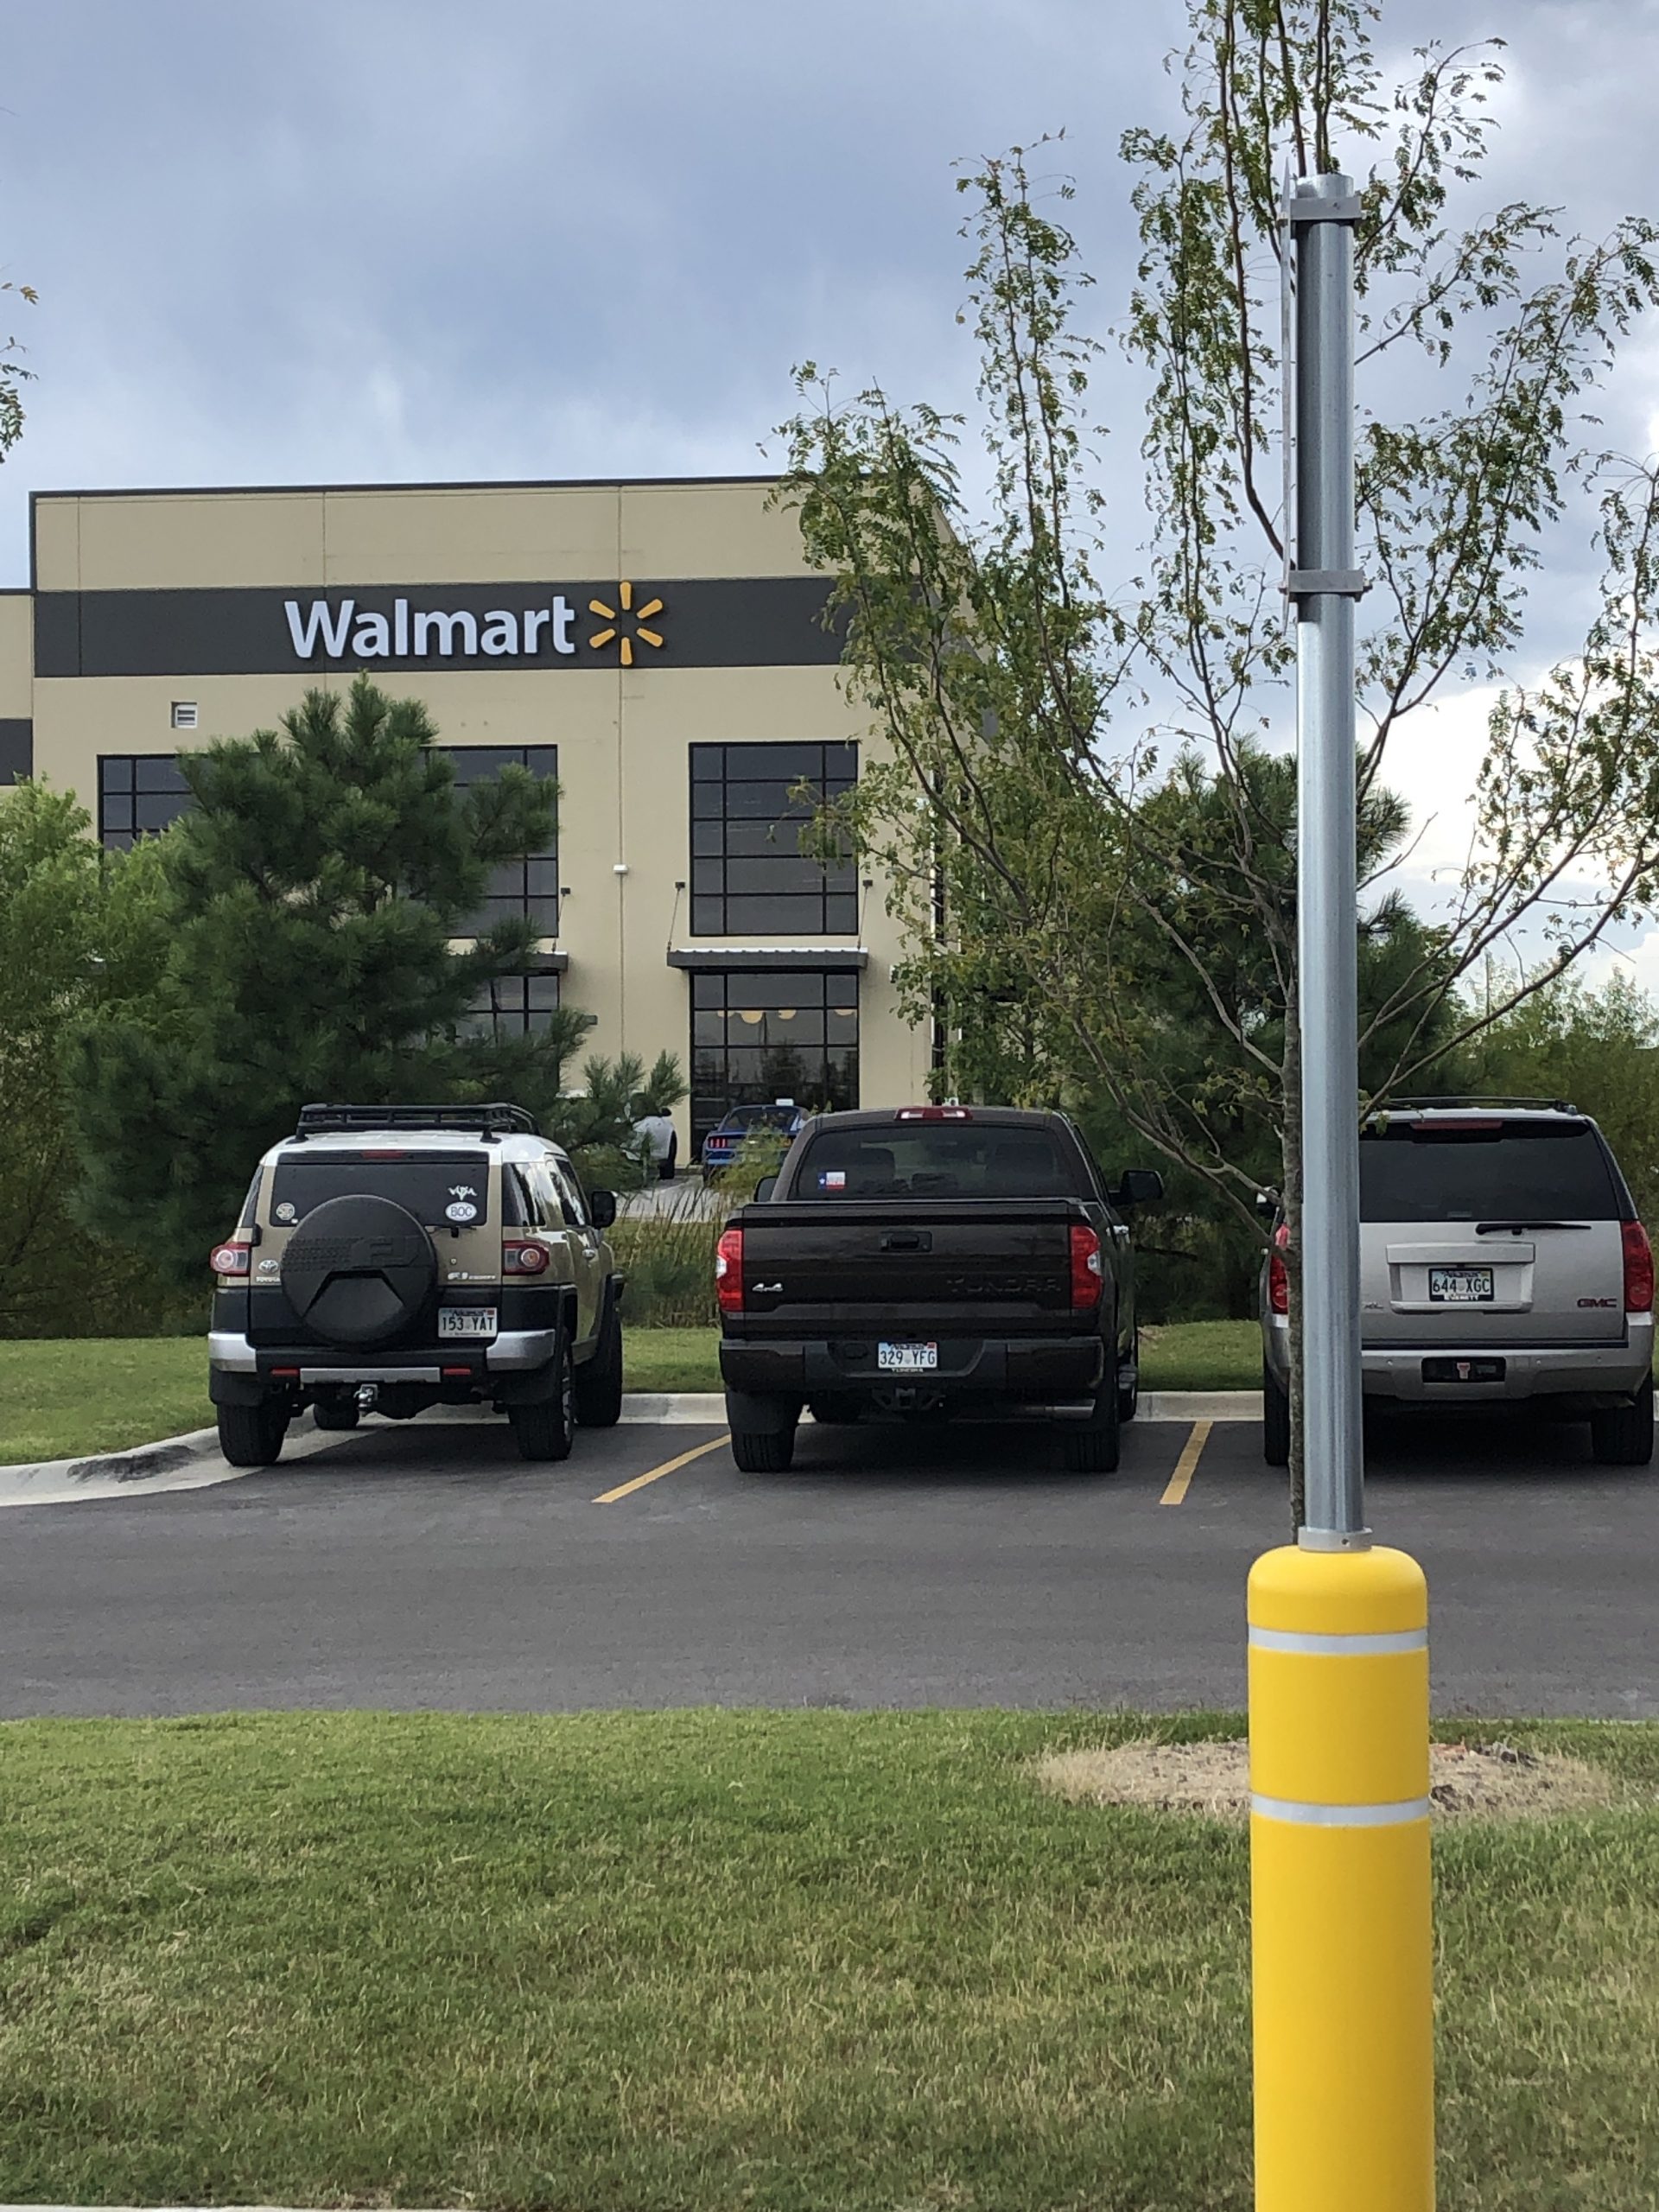 Wal-Mart Corporate Headquarters